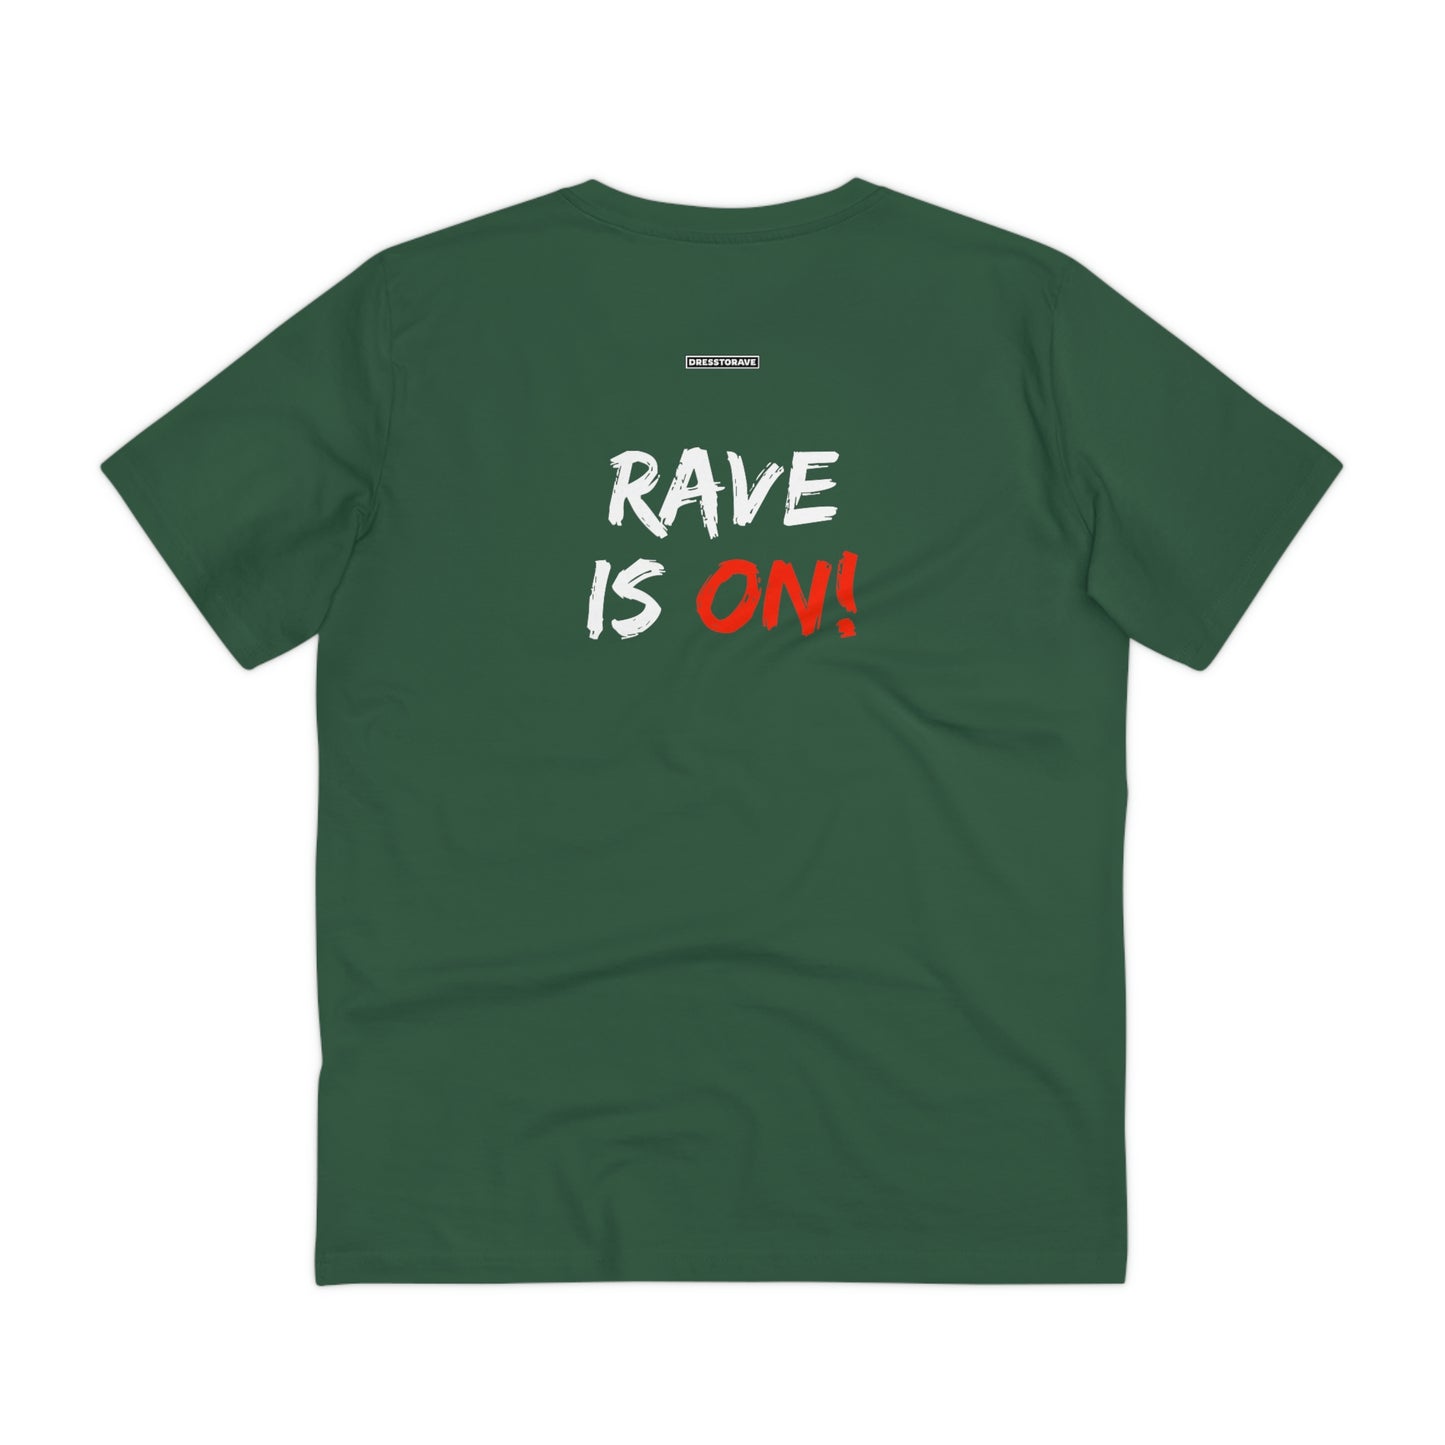 Rave is on! - Organic T-shirt - Unisex